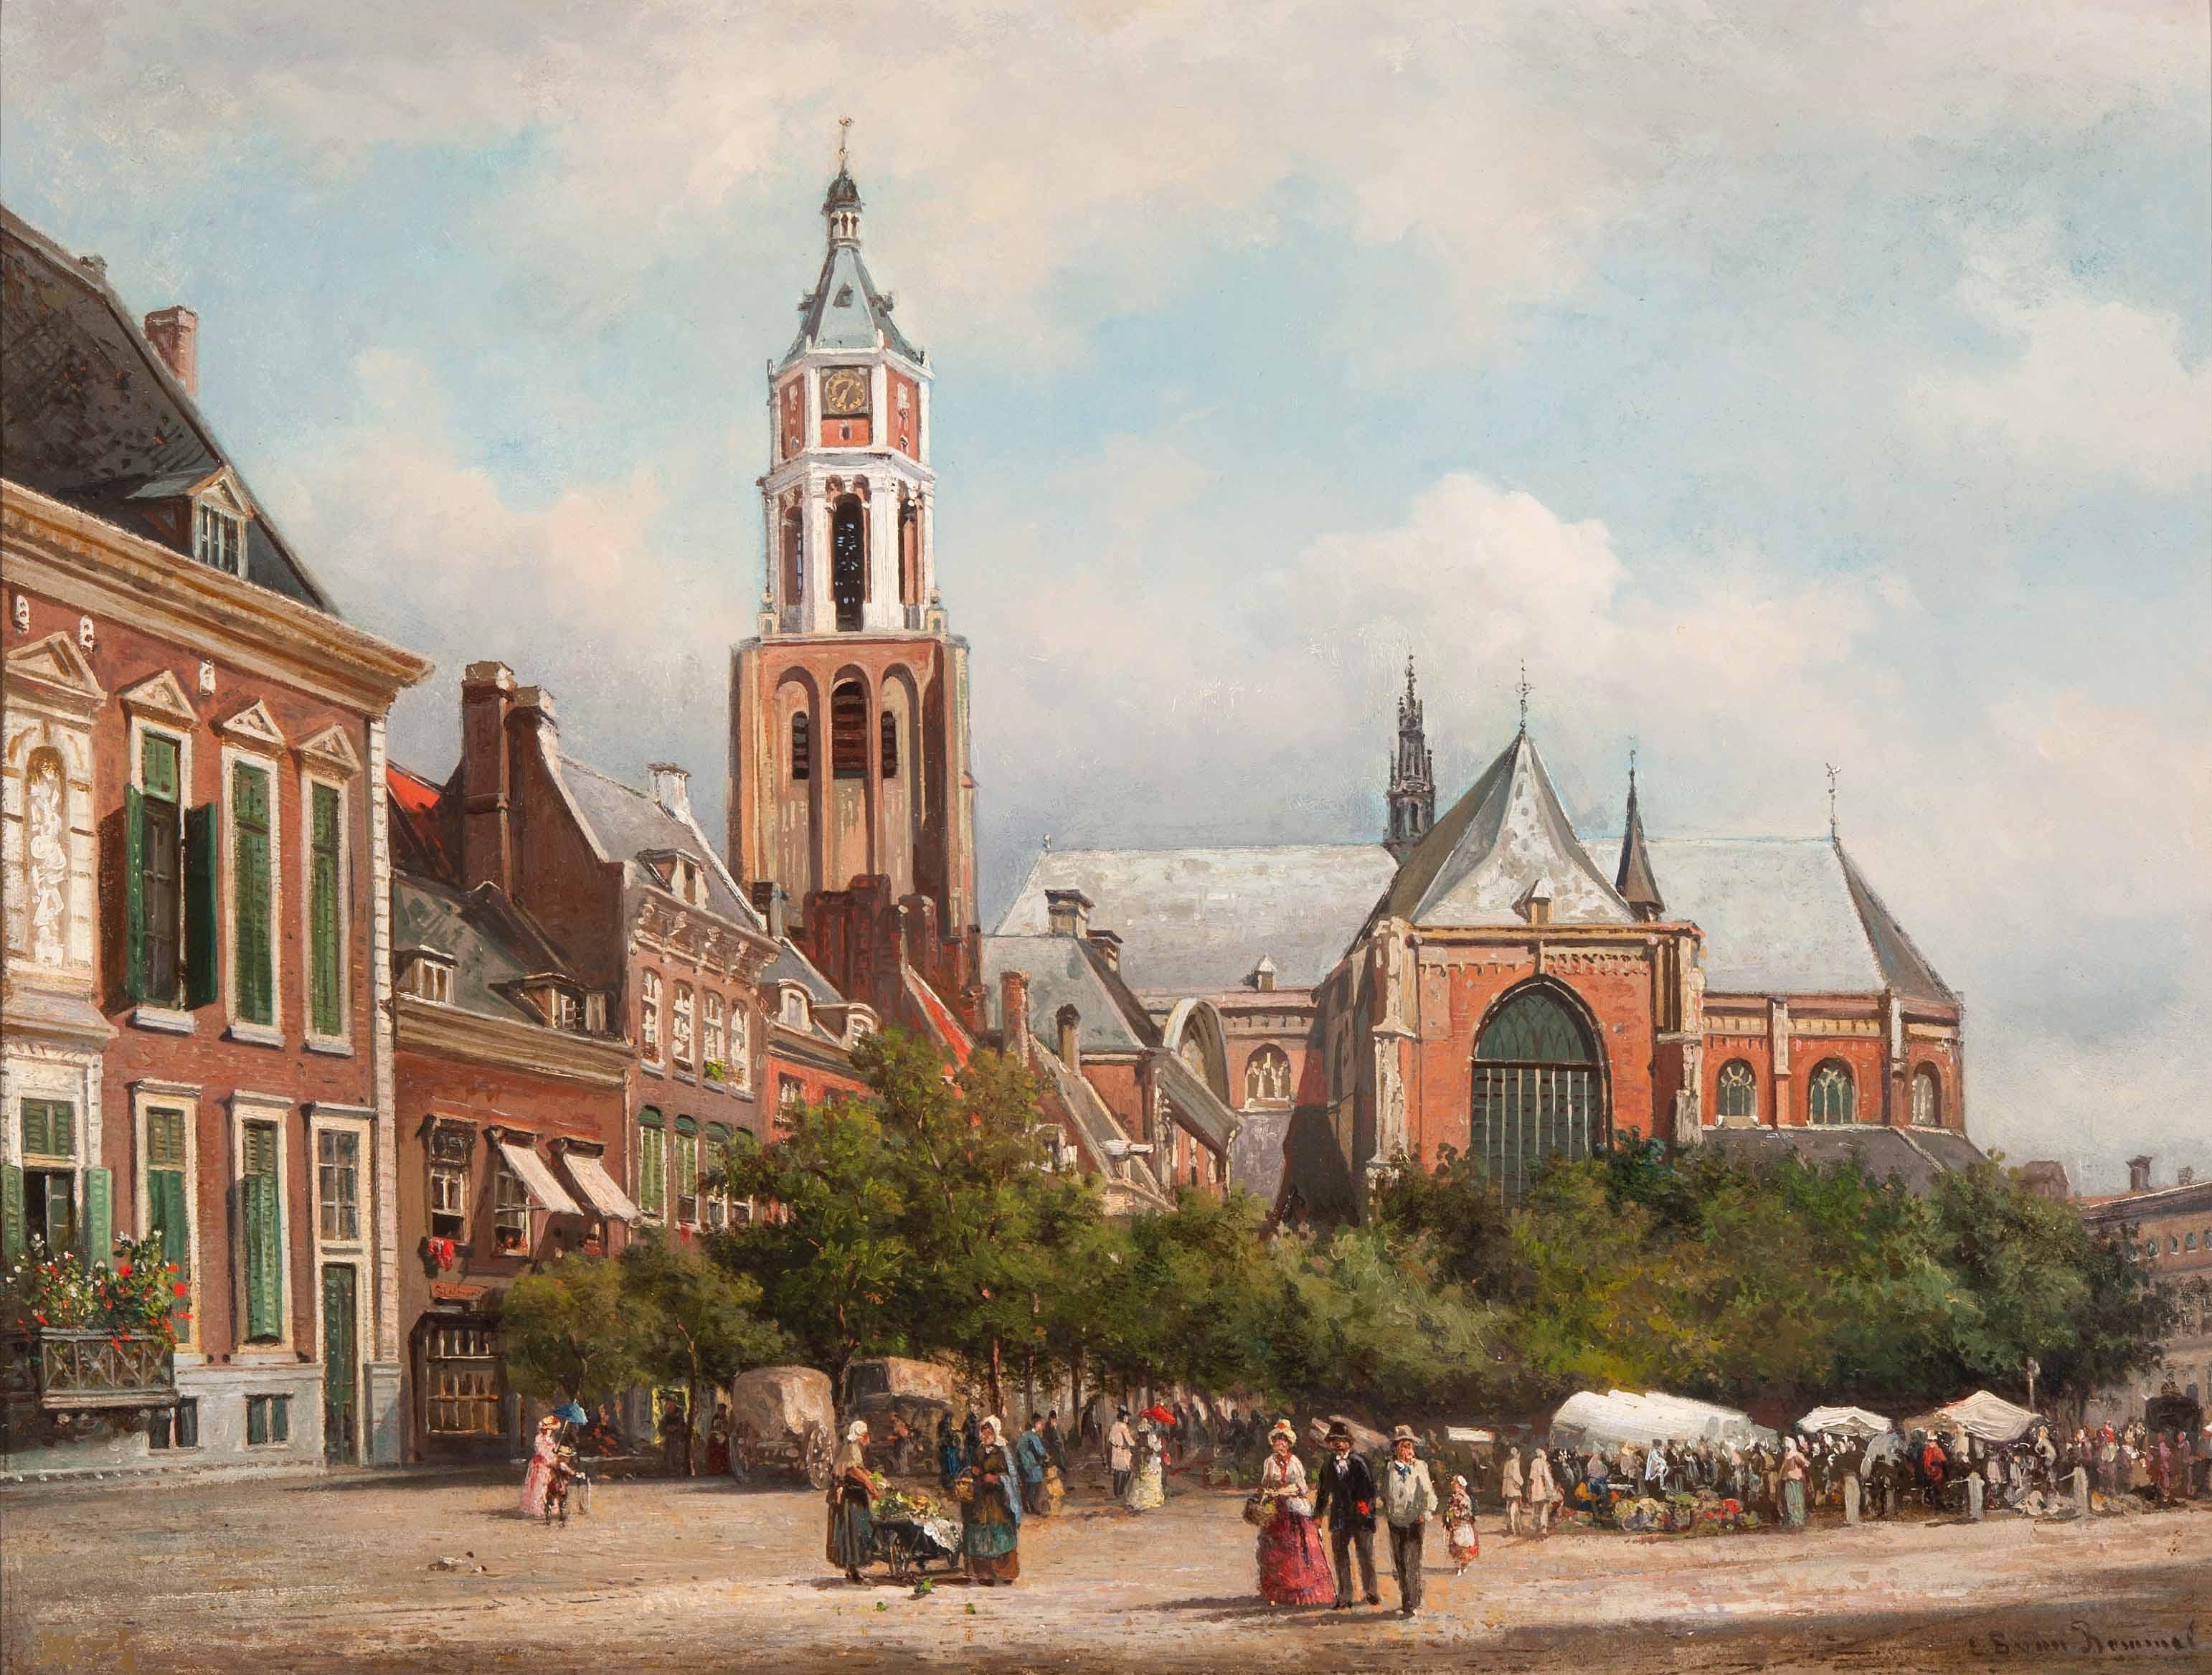 View of the Kerkplein square and the Eusebius church in Arnhem by Elias Pieter van Bommel, 1884